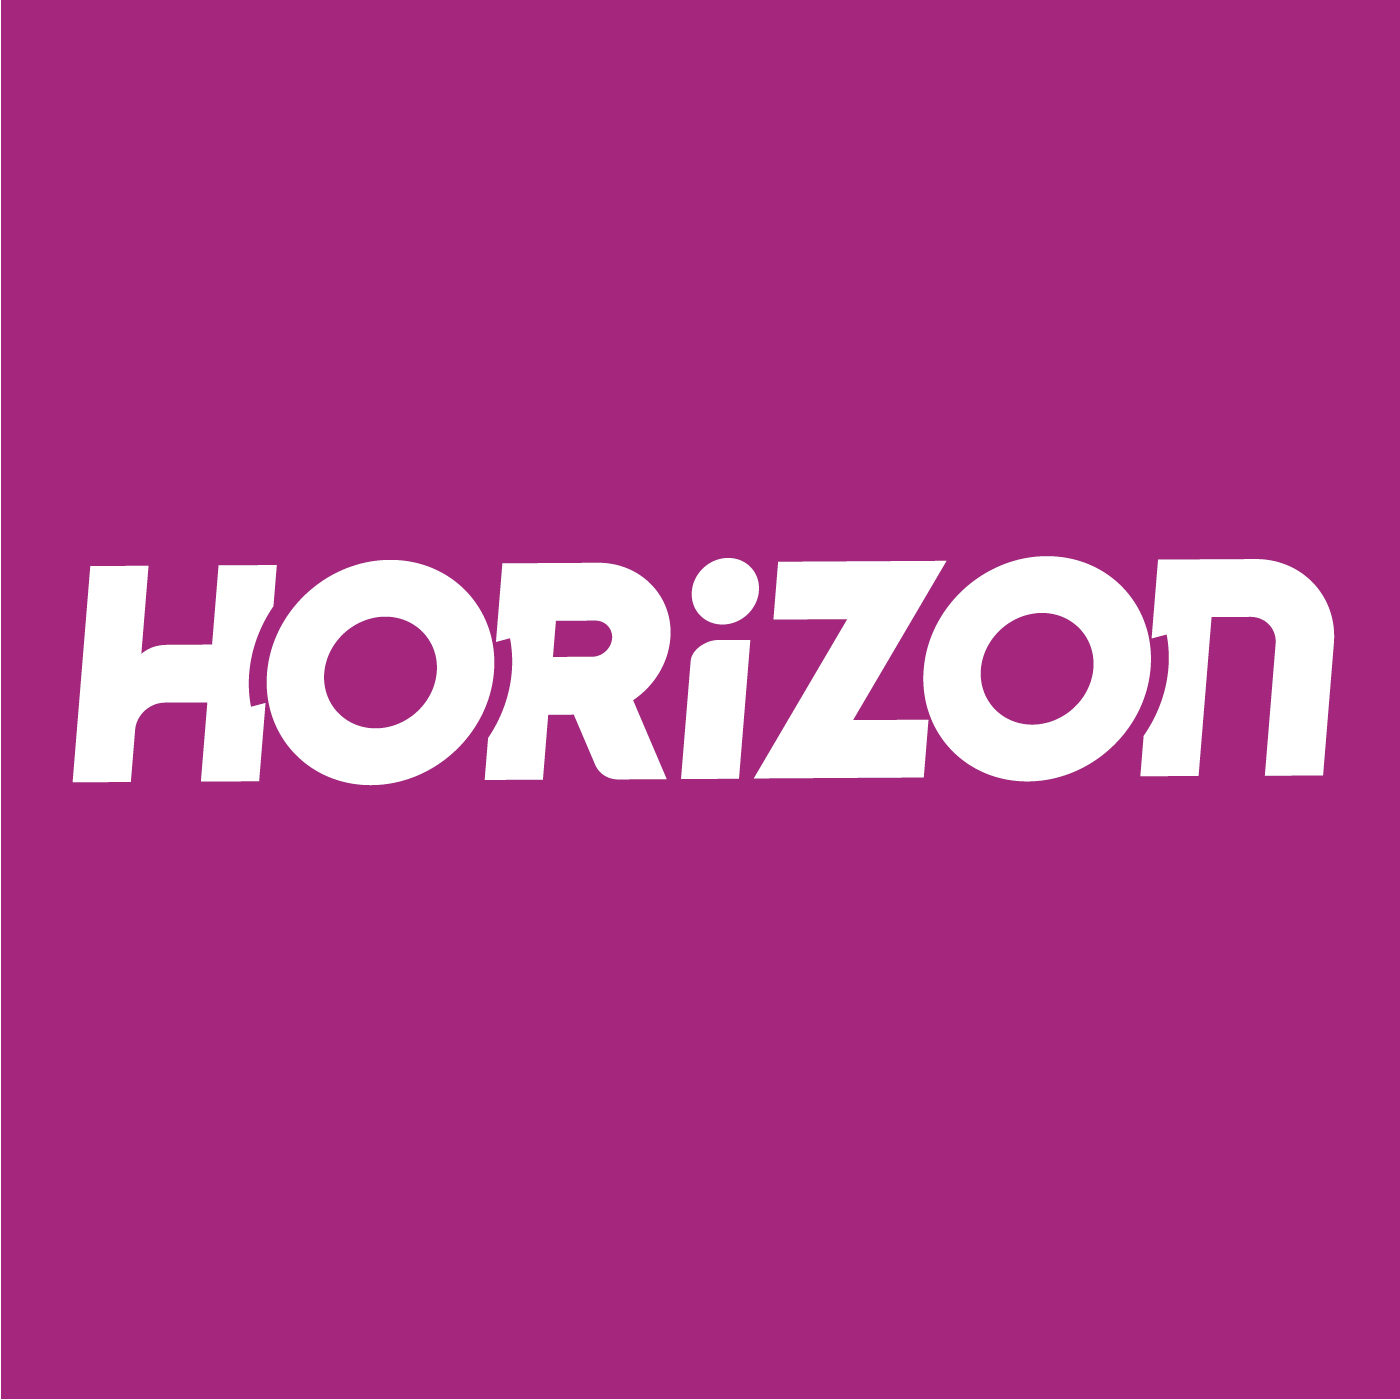 Ecouter la radio d'Horizon Actu'